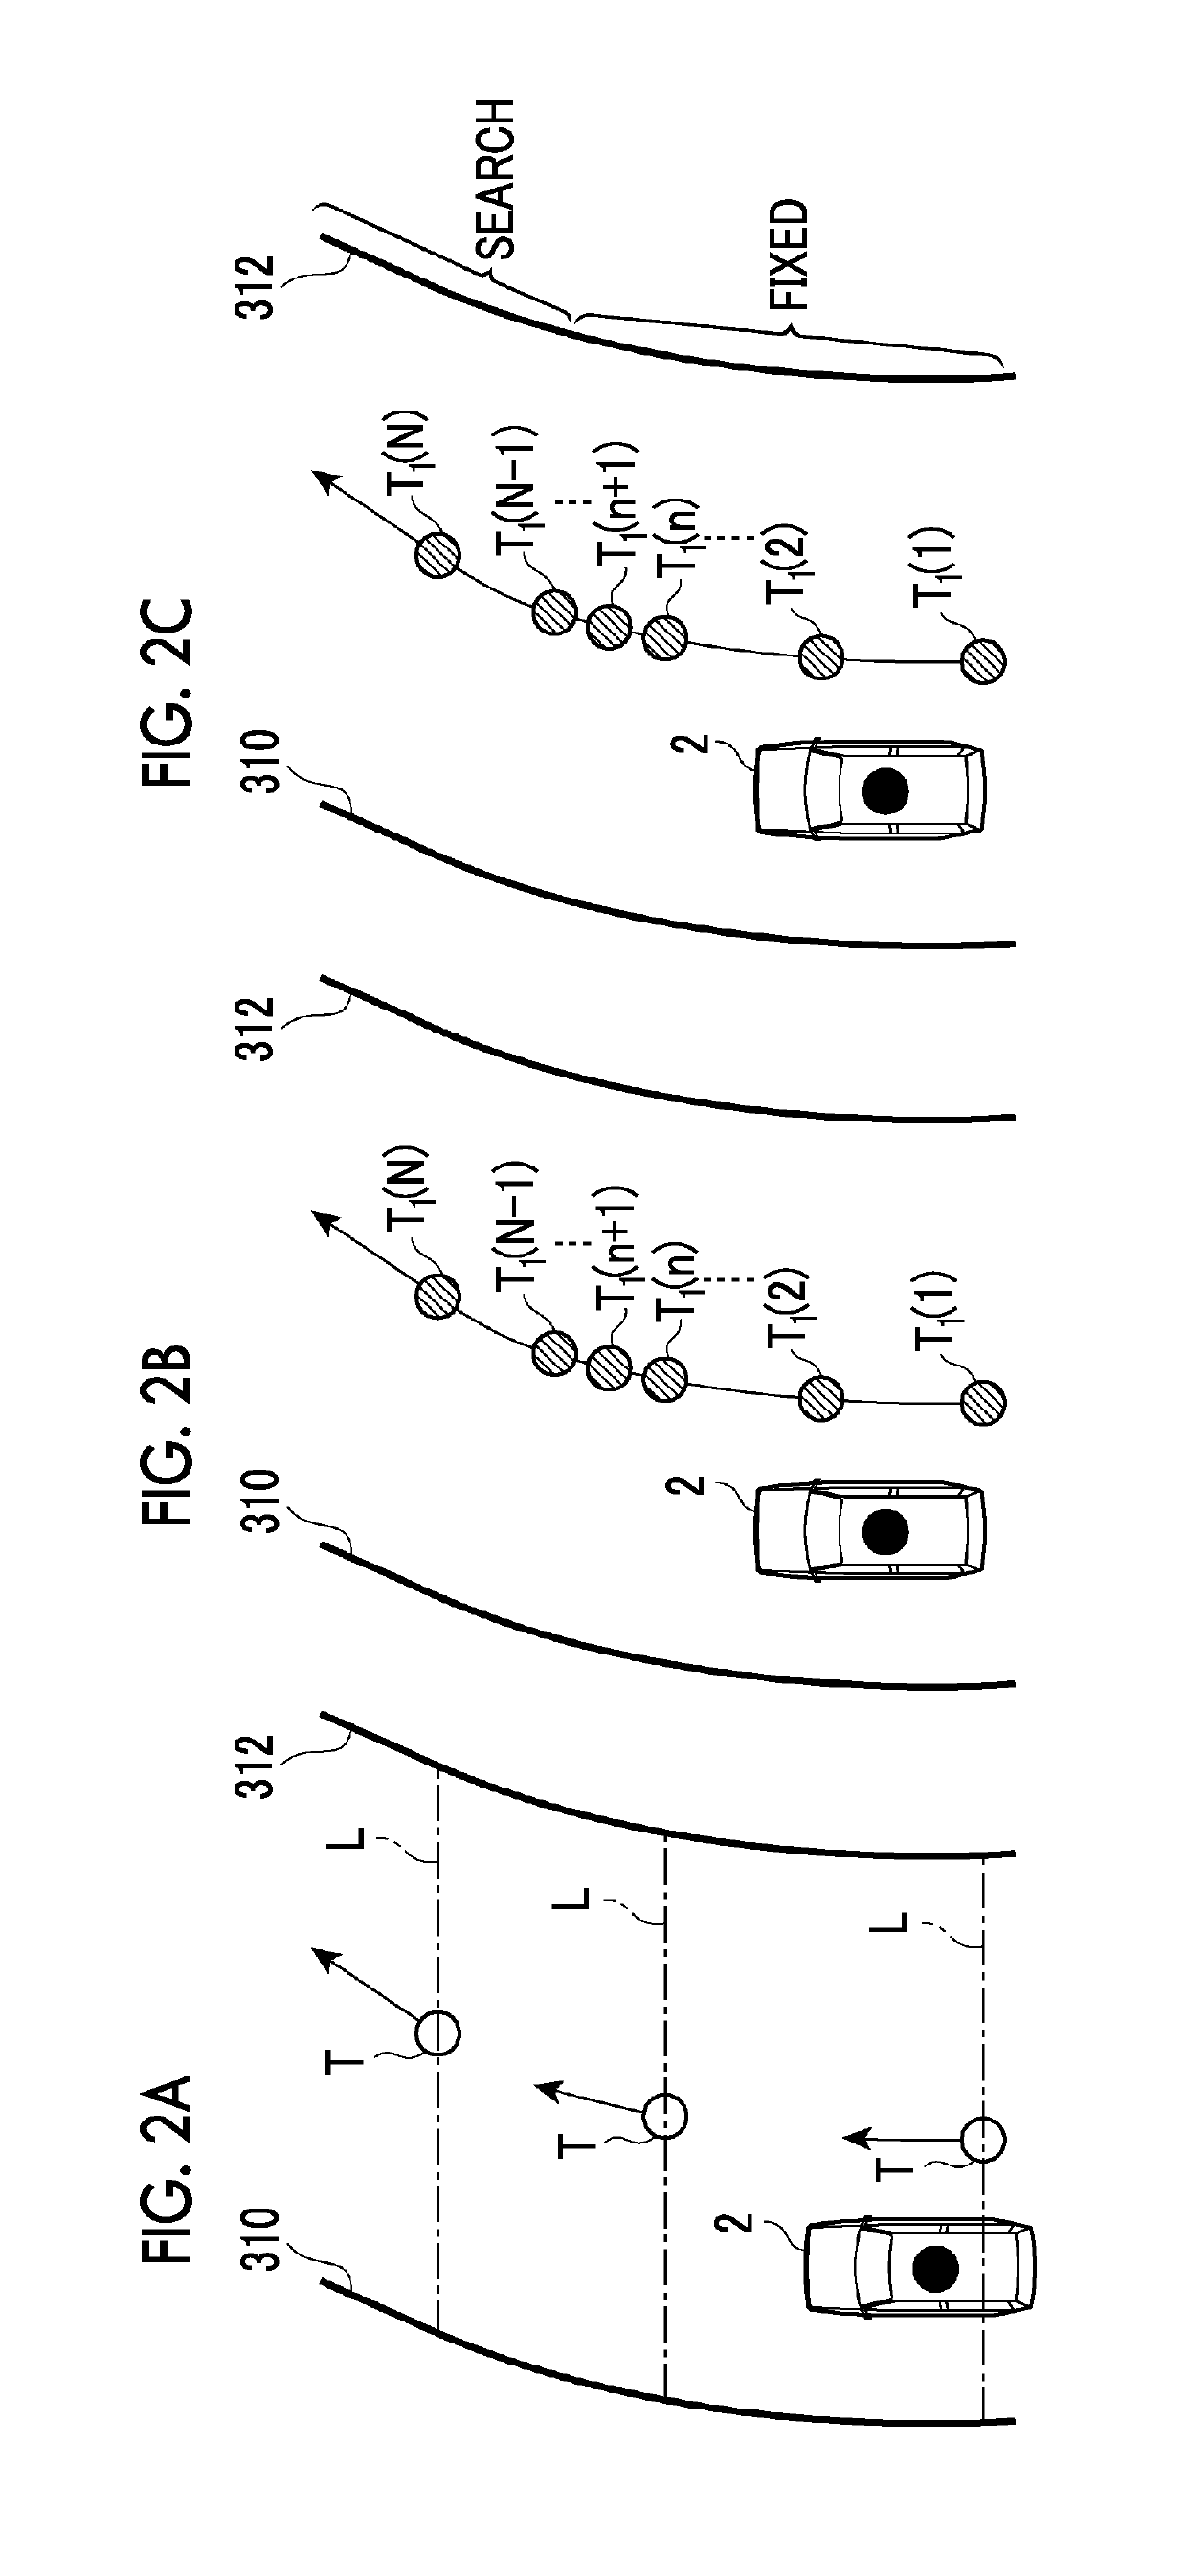 Vehicle control device